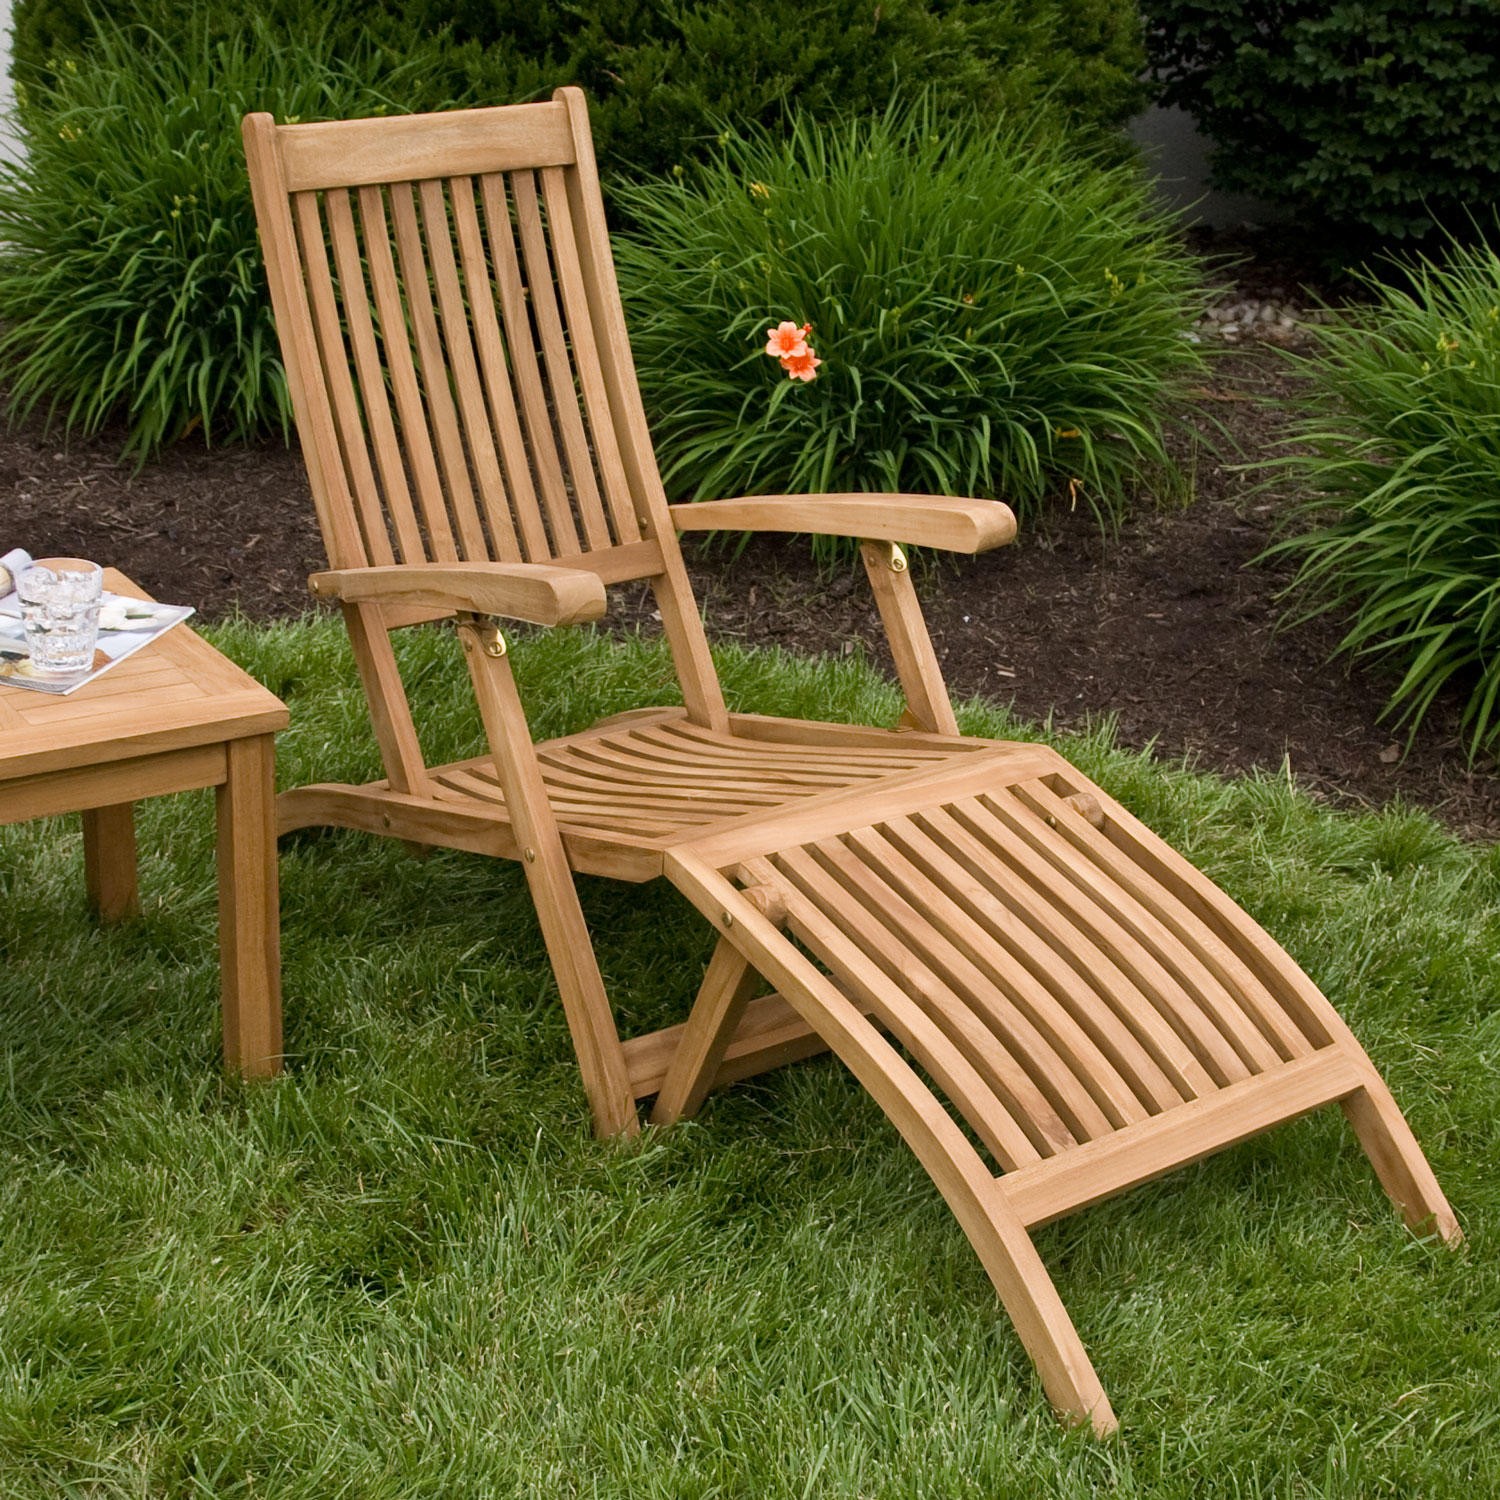 Teak Outdoor Lounge Furniture